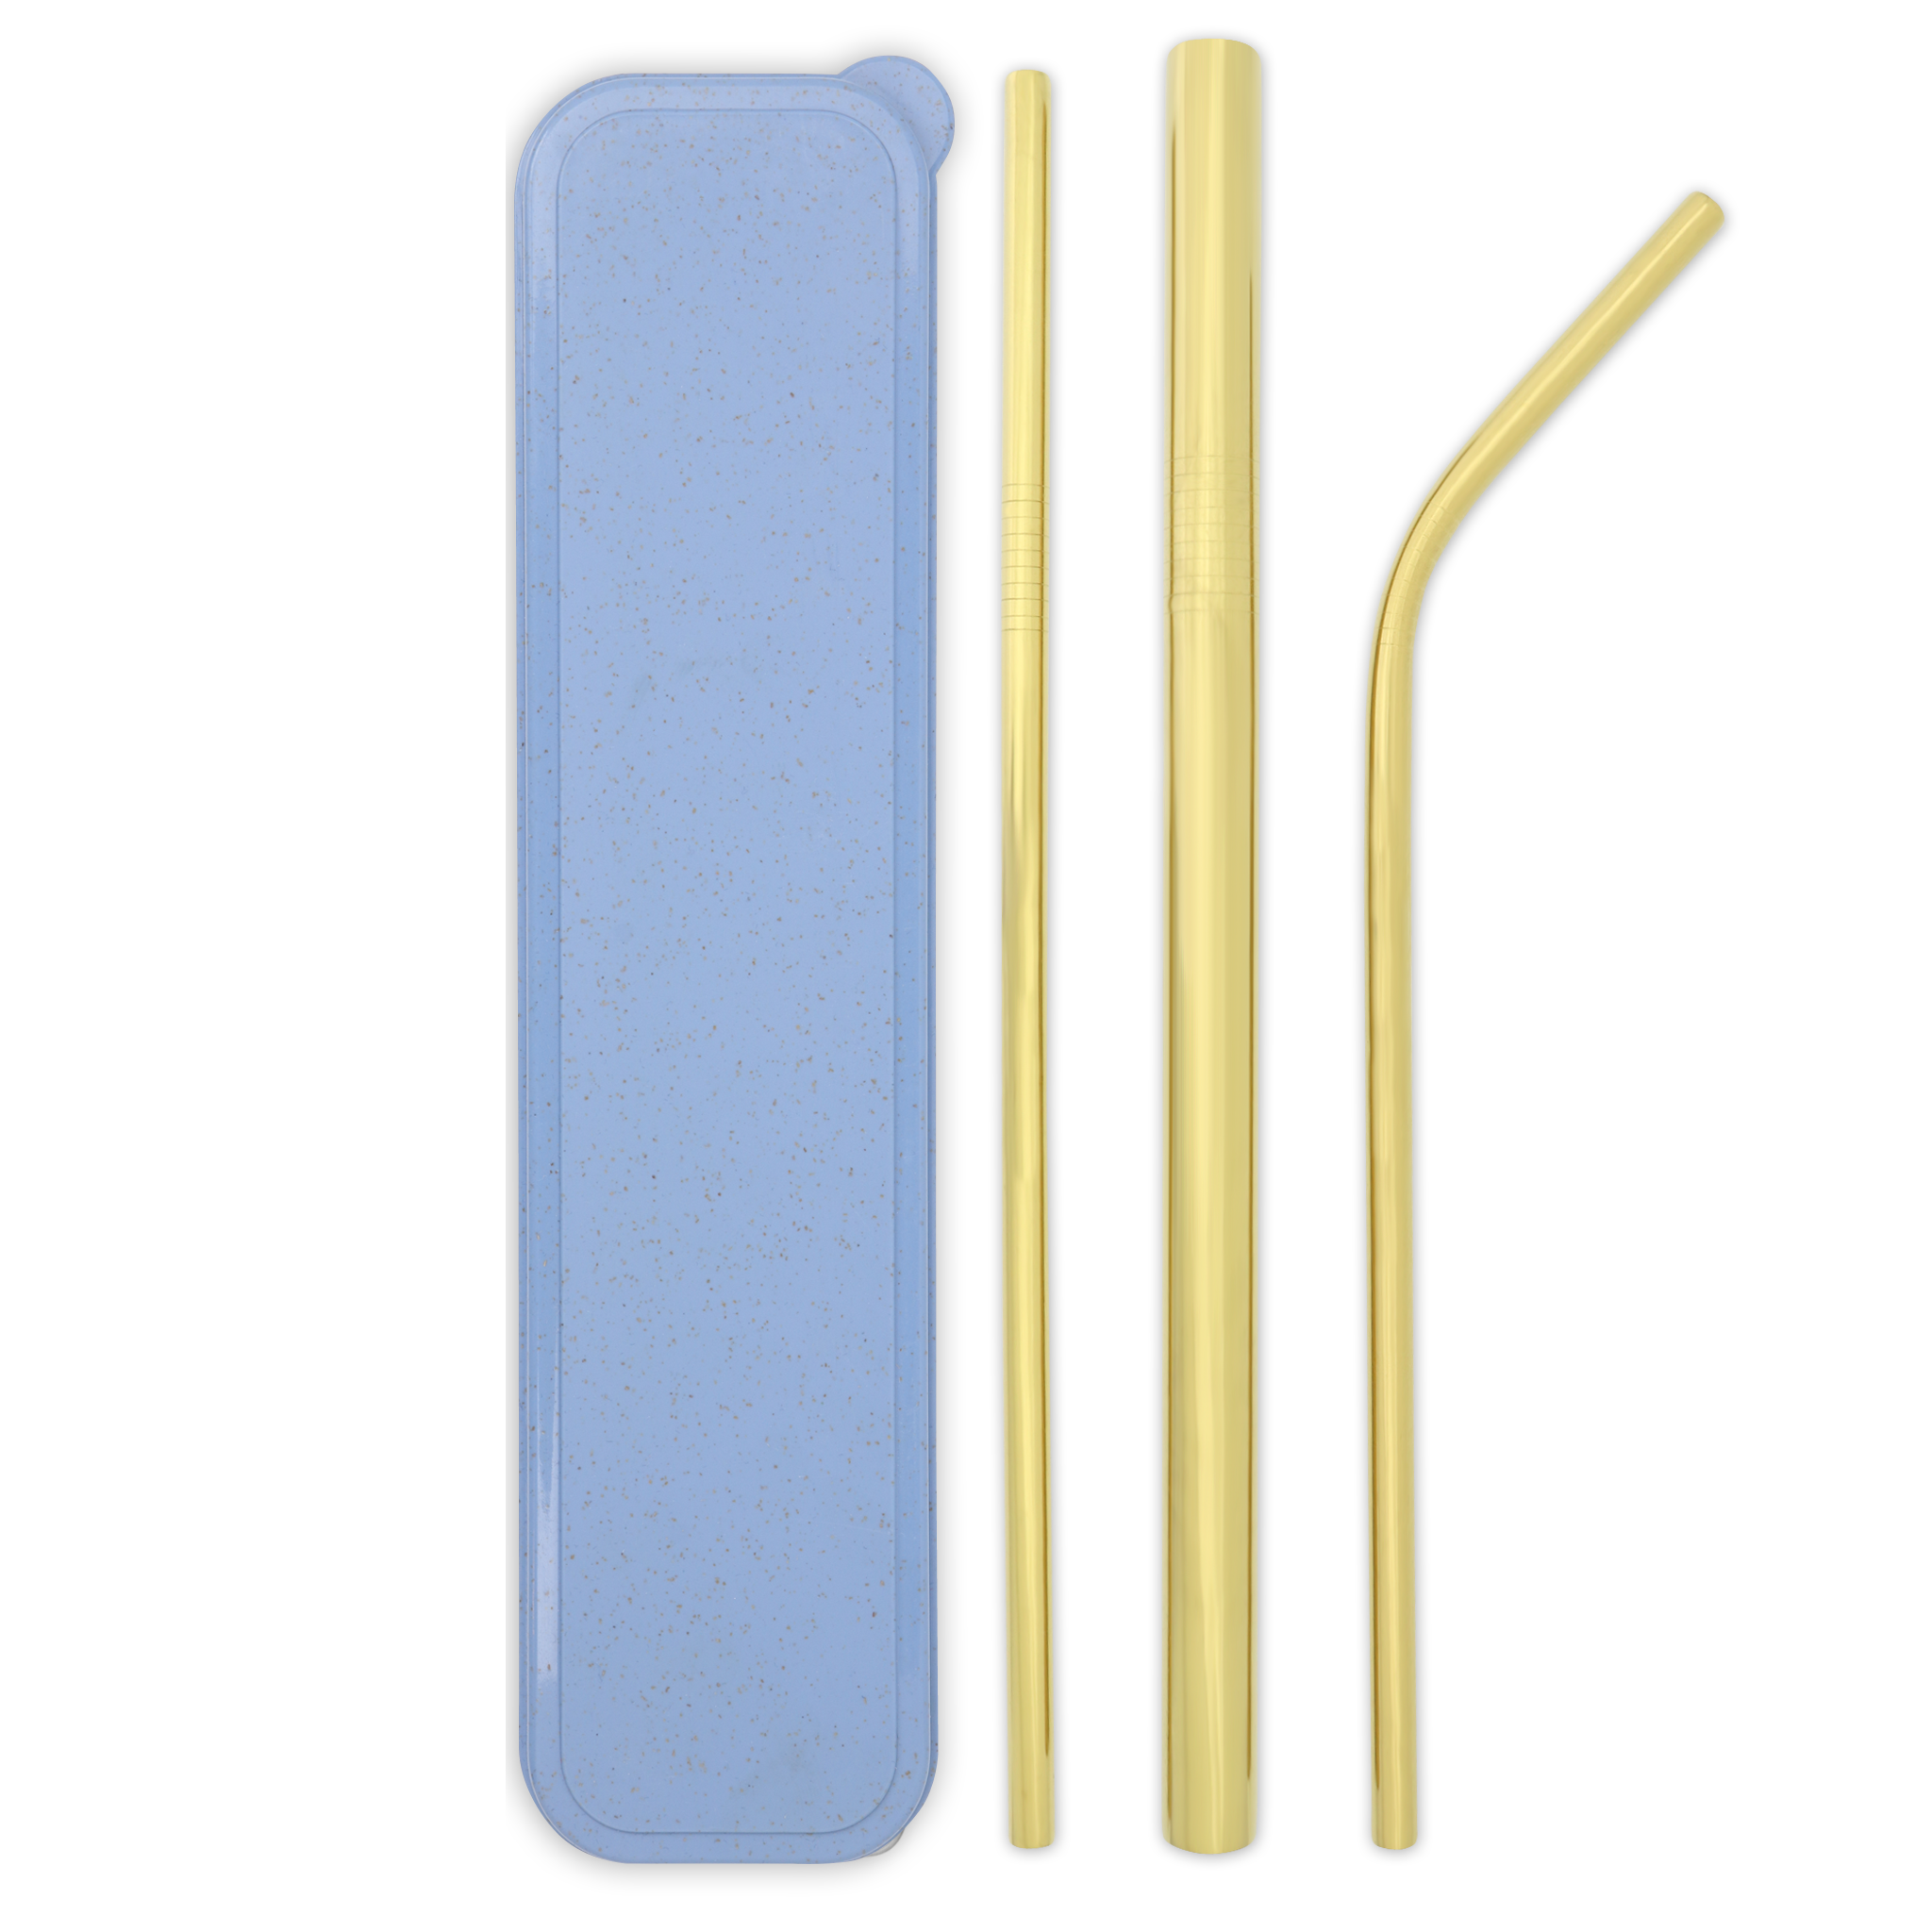 Triple Threat Stainless Steel Straws Box Set (Gold)